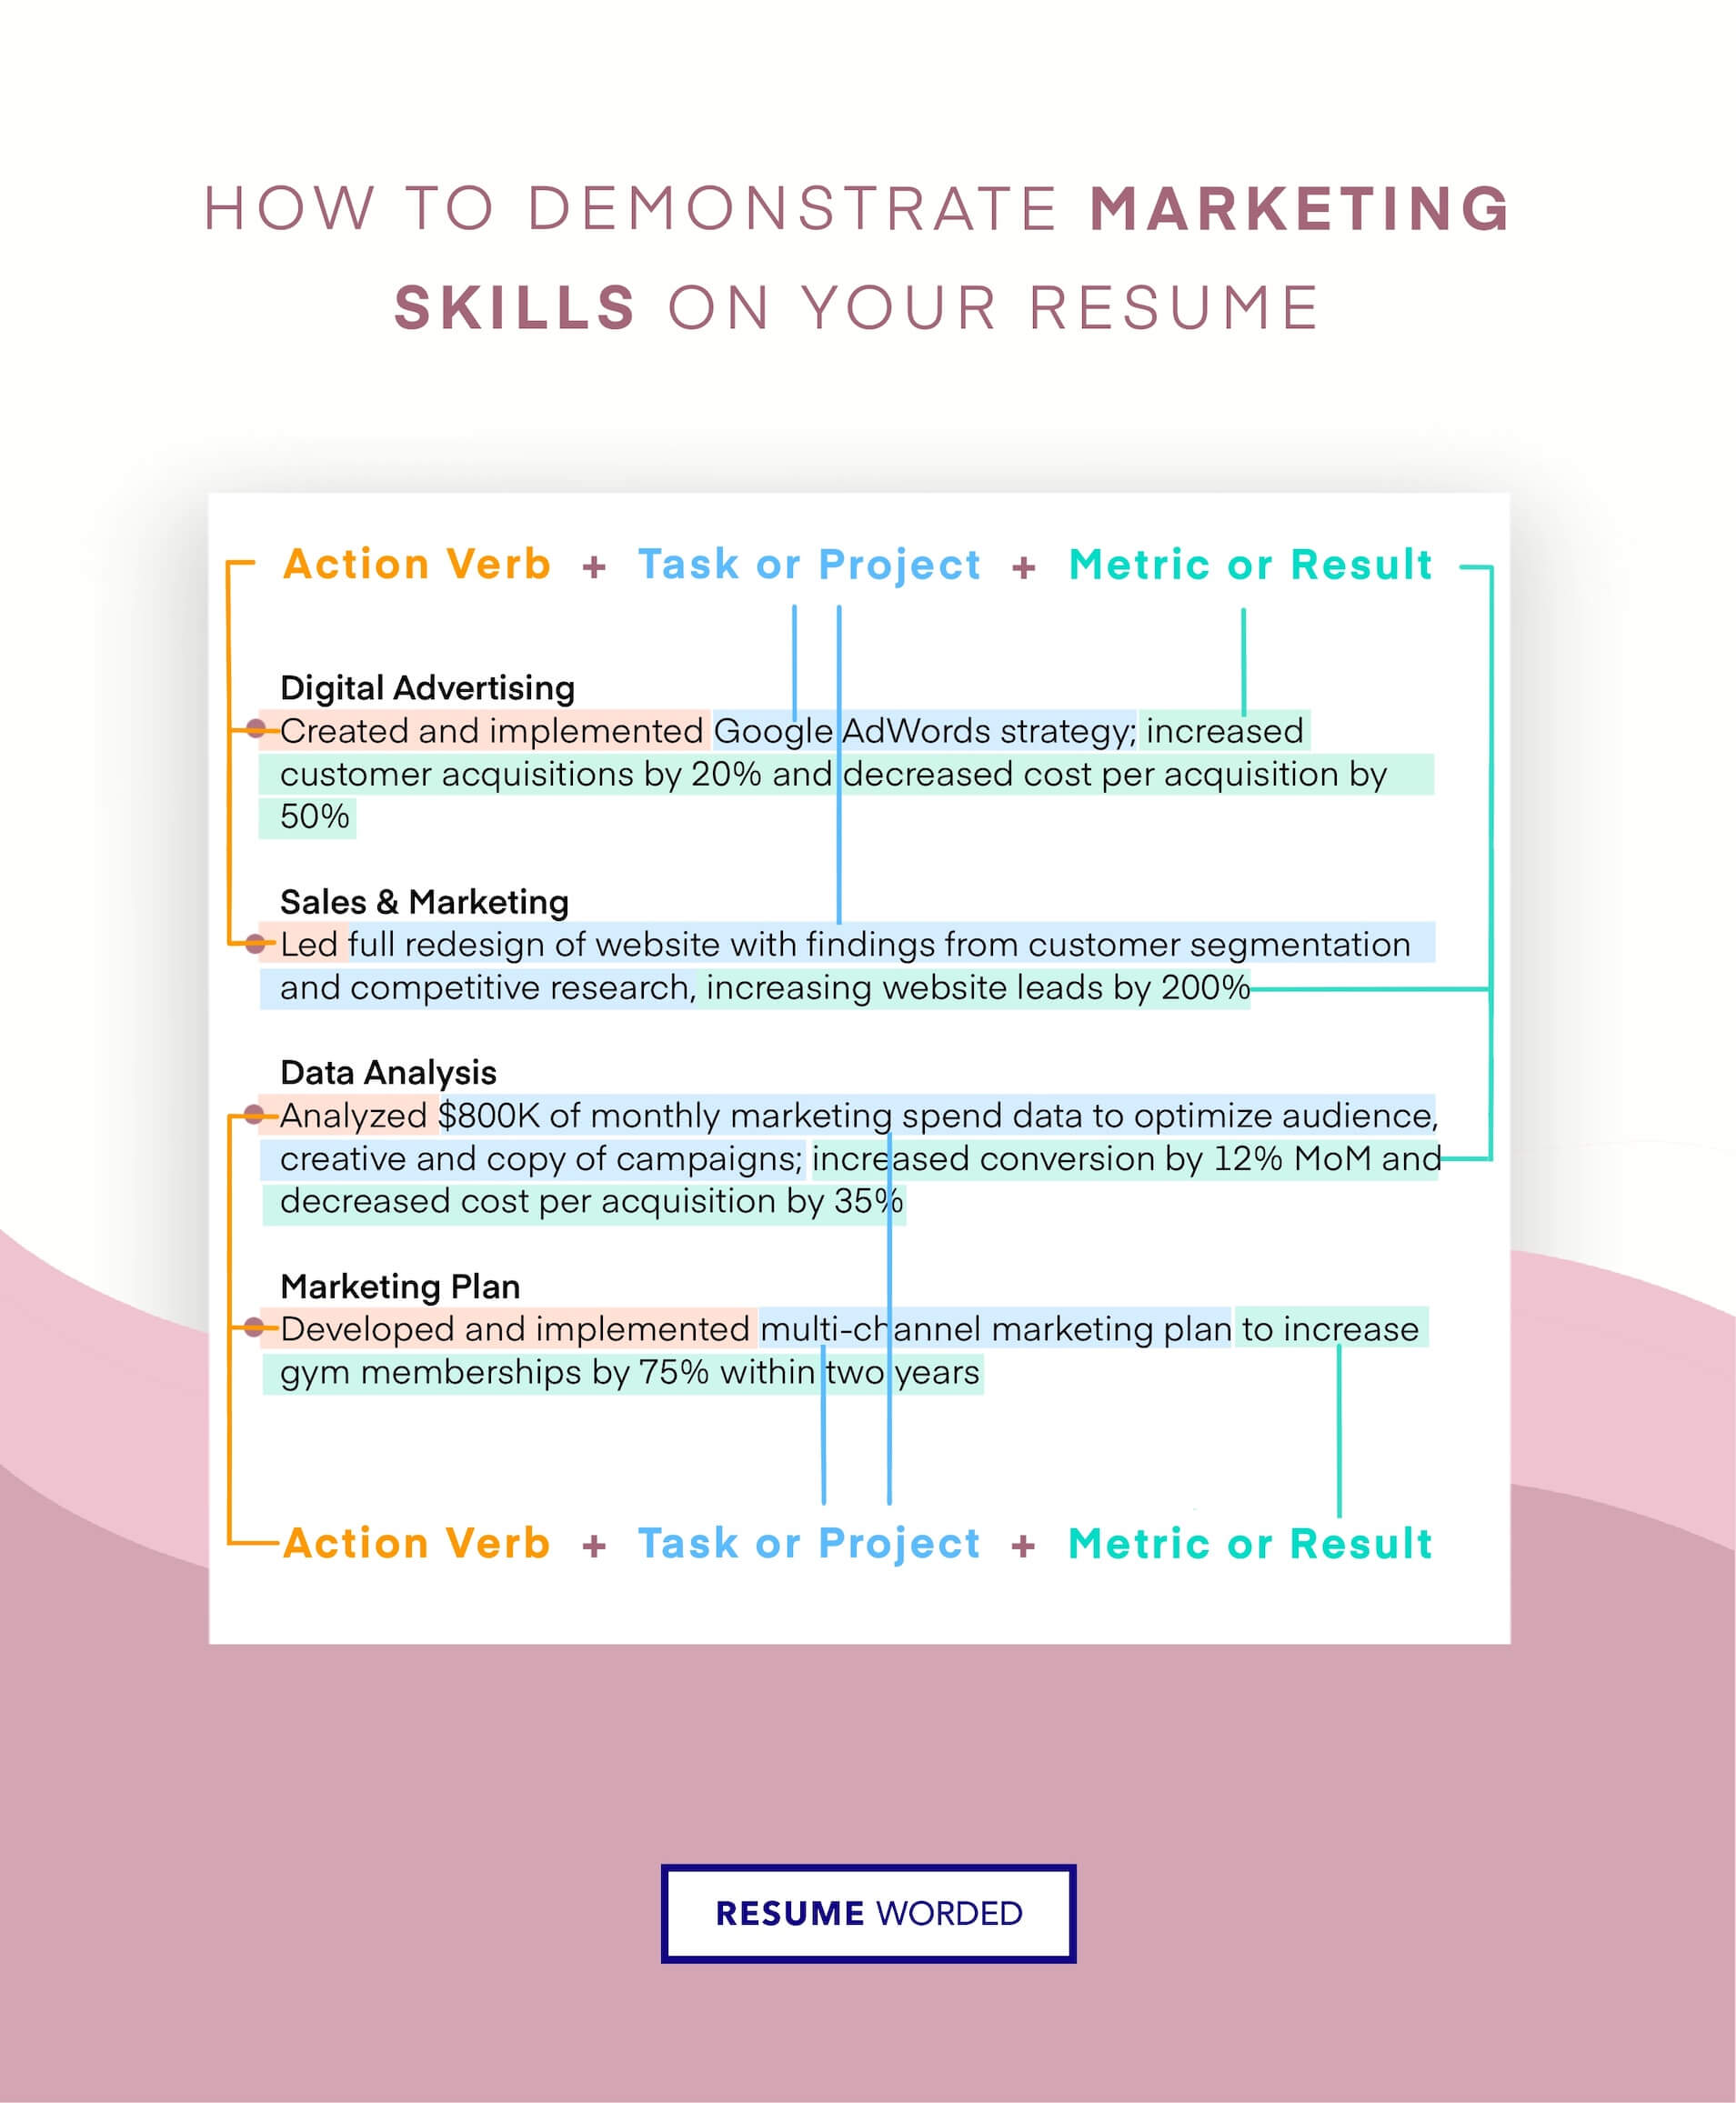 Showcase digital marketing skills - Advertising Account Executive CV